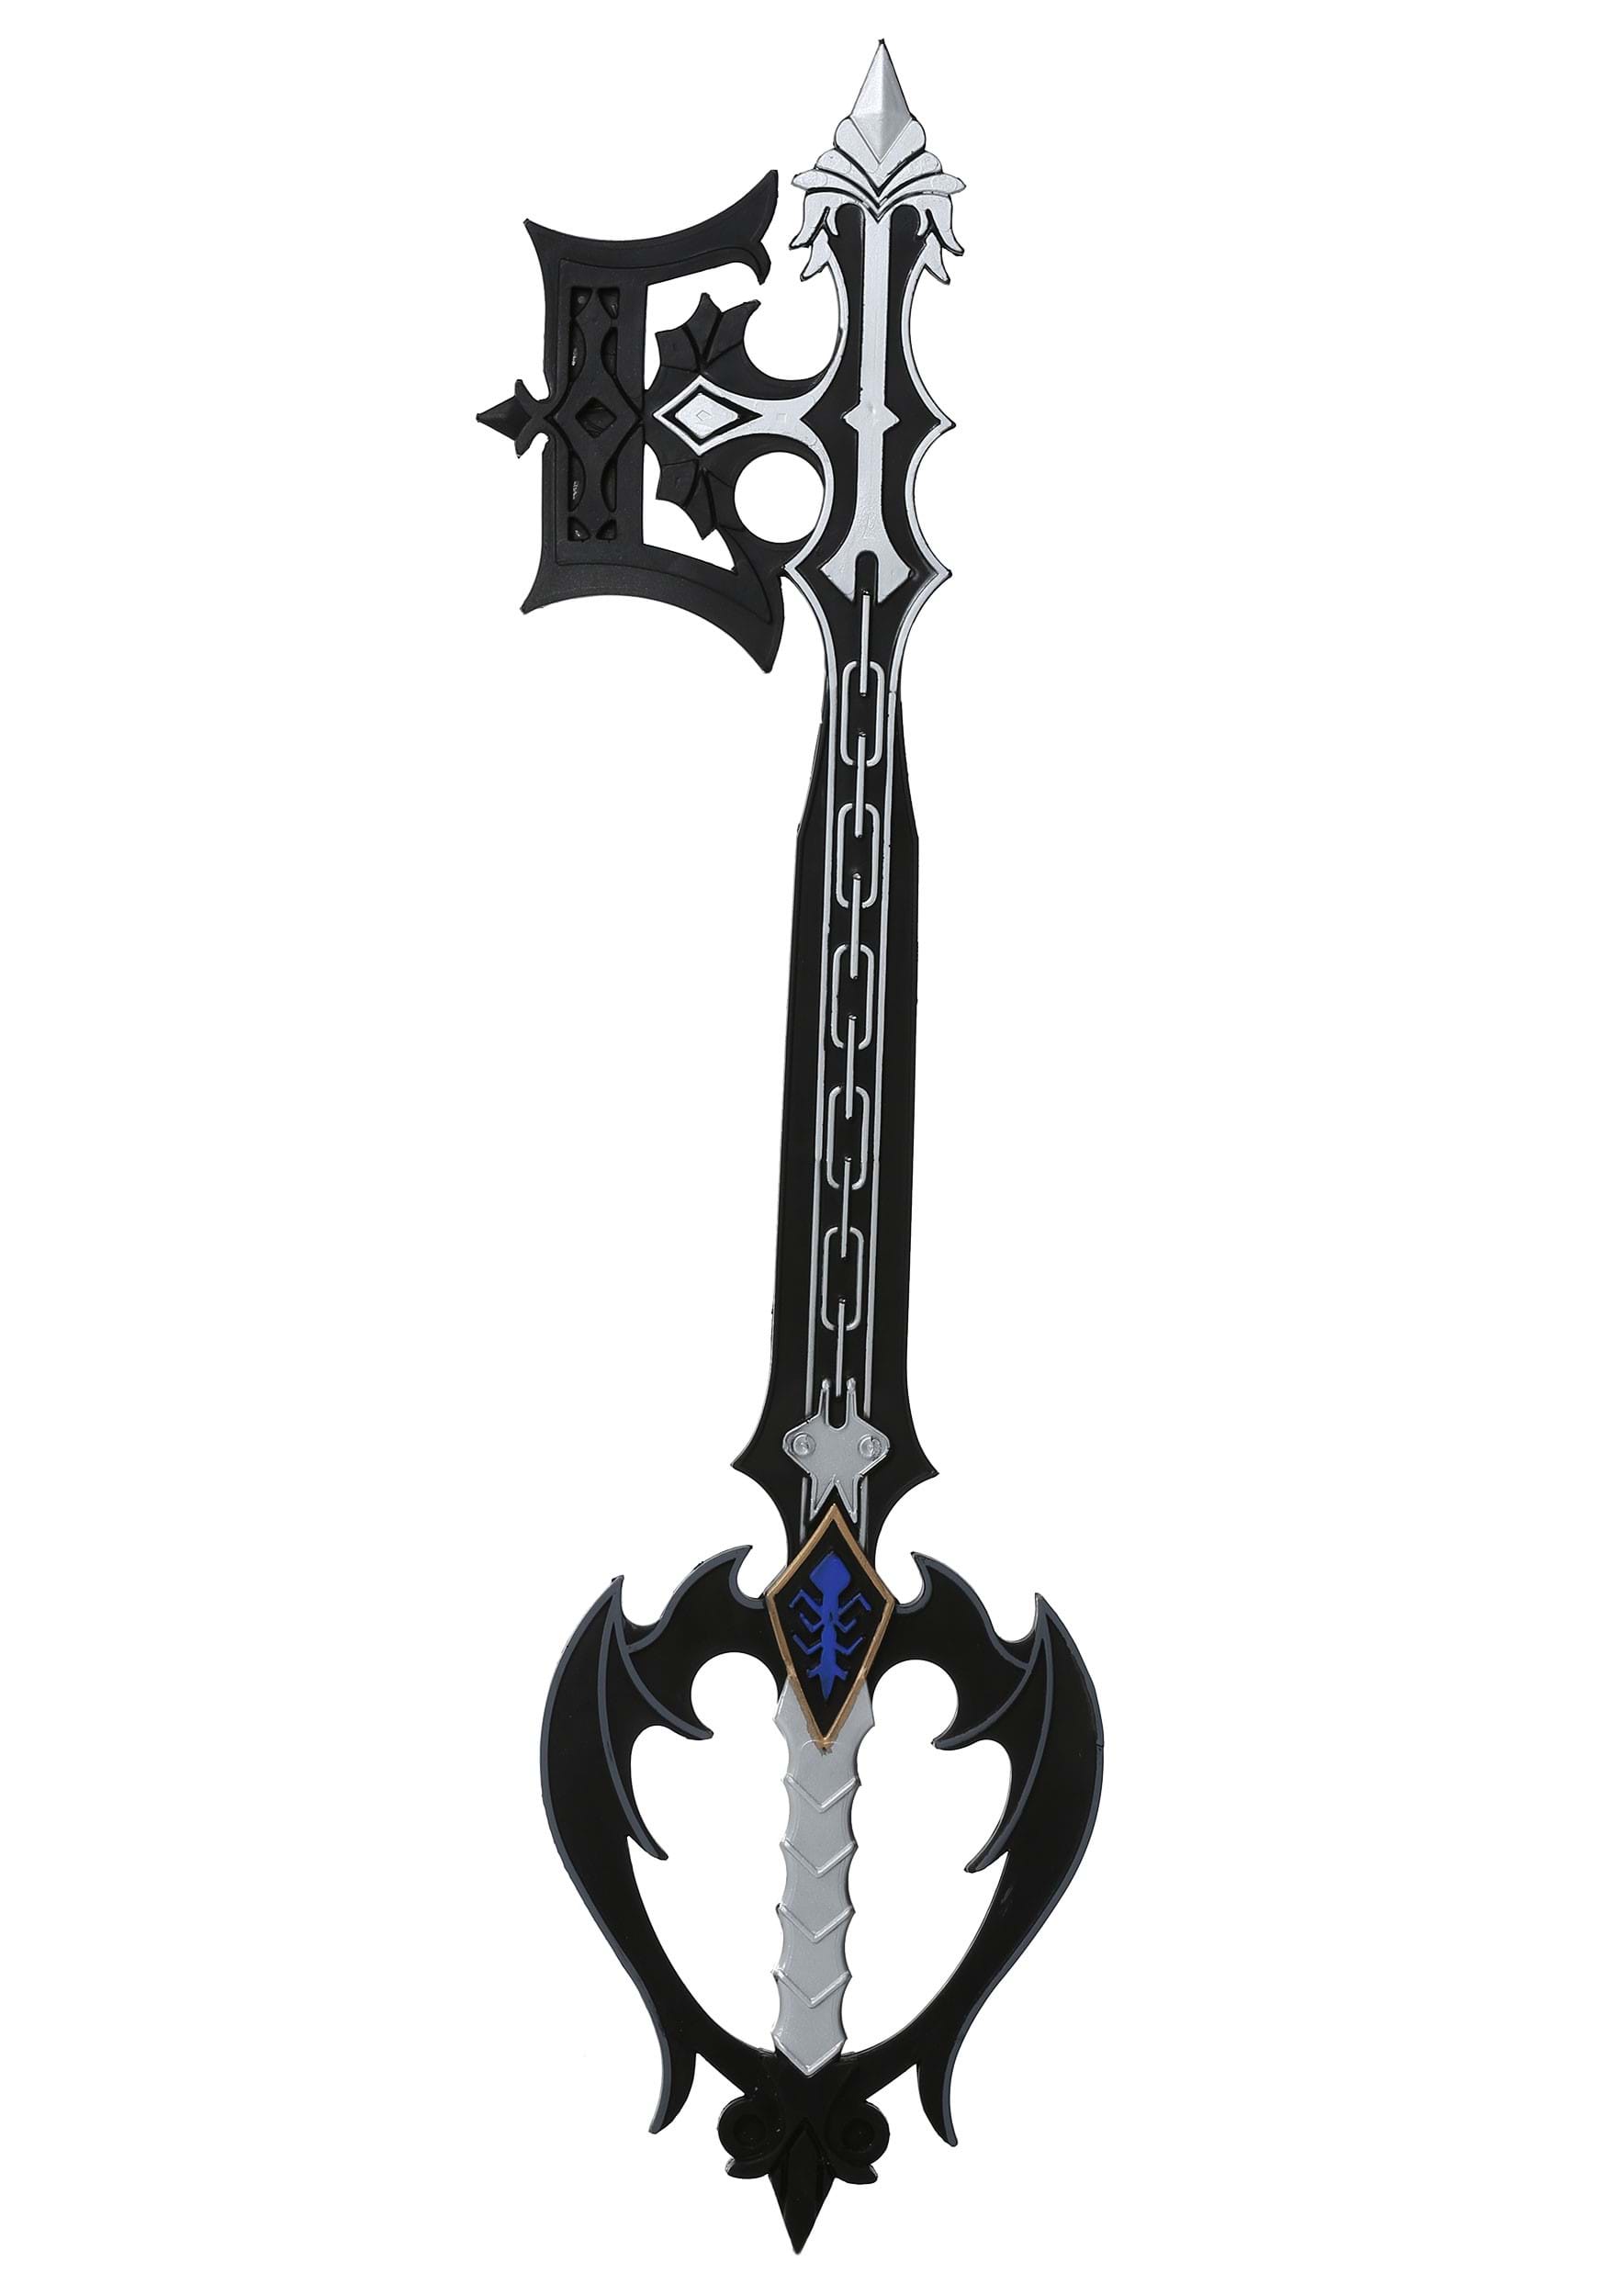 Oblivion Keyblade from Kingdom Hearts